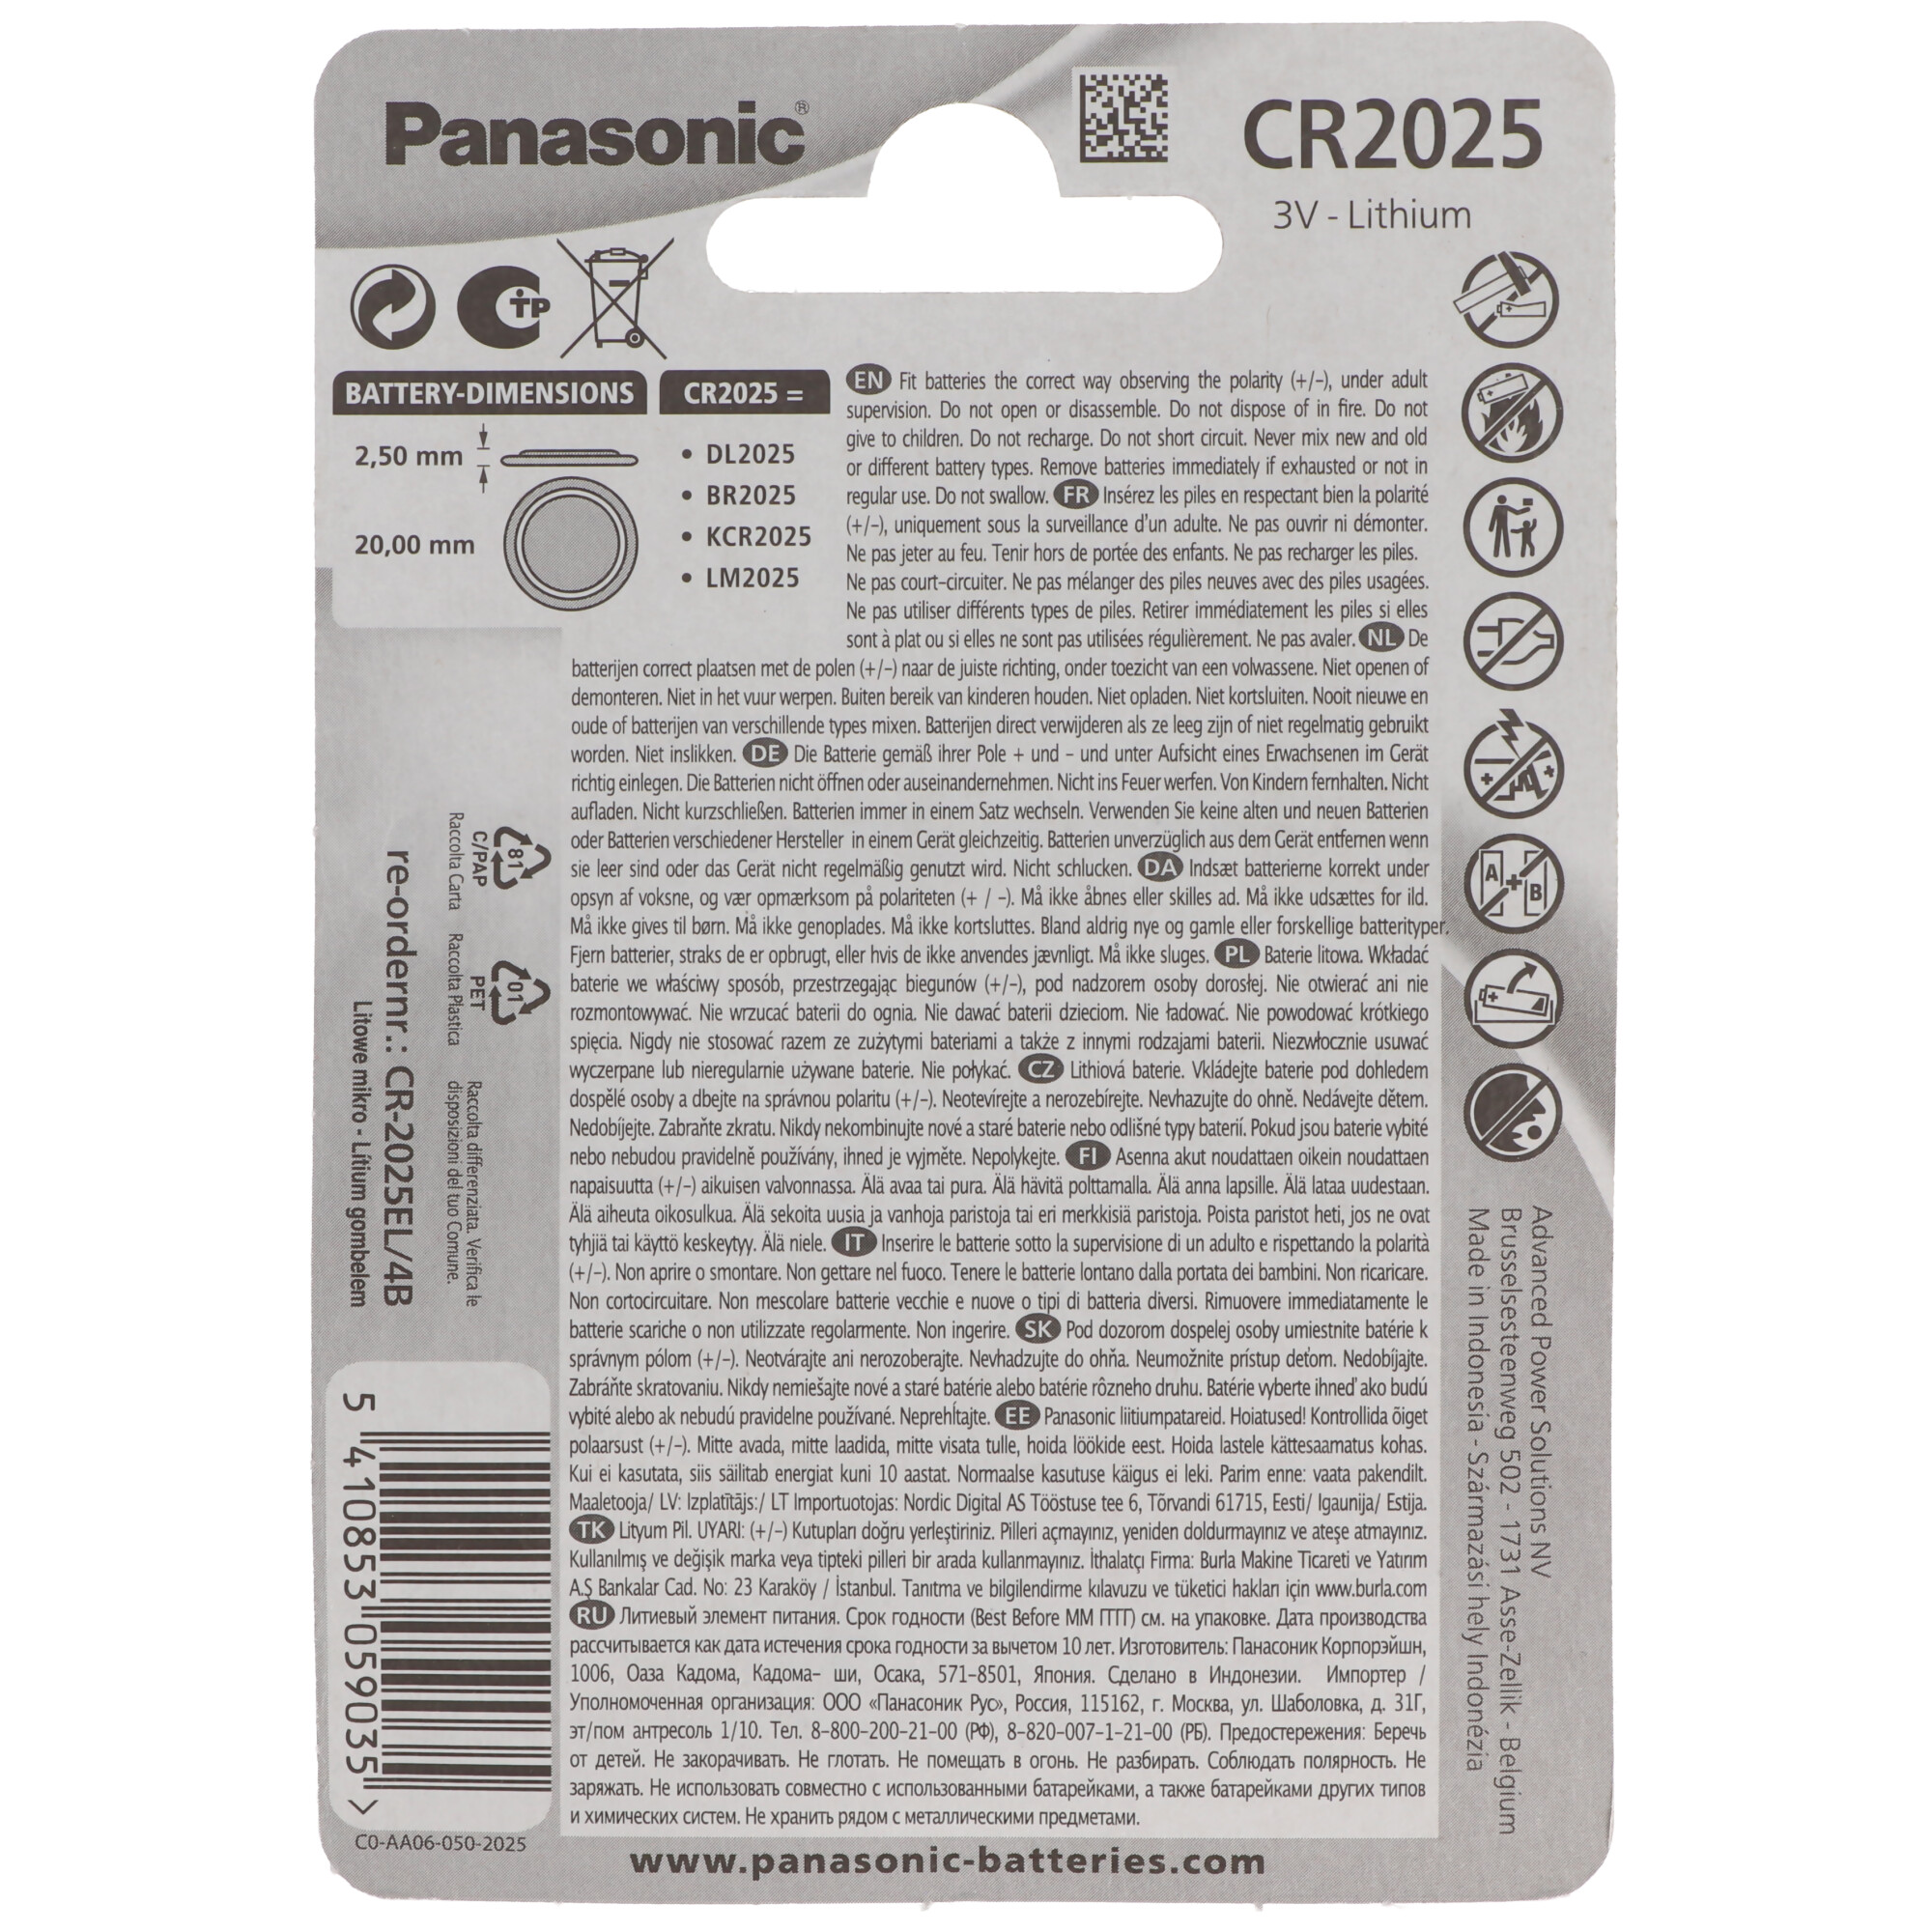 Panasonic Batterie Lithium, Knopfzelle, CR2025, 3V Electronics, Lithium Power, Retail Blister (4-Pack)